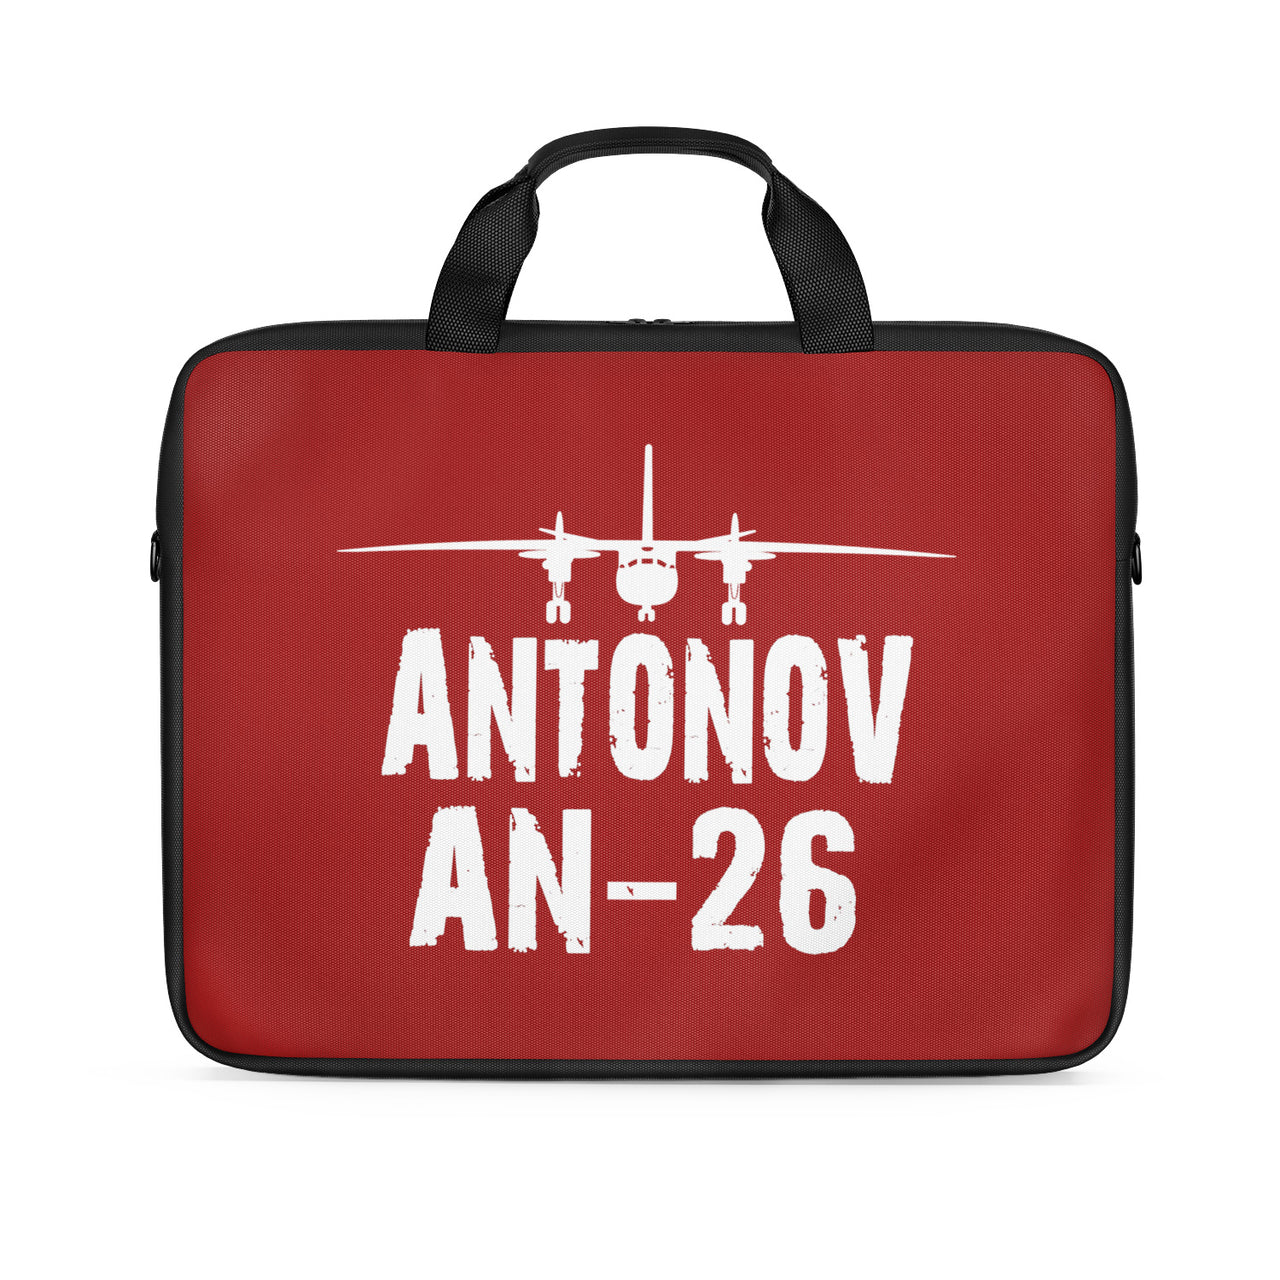 Antonov AN-26 & Plane Designed Laptop & Tablet Bags